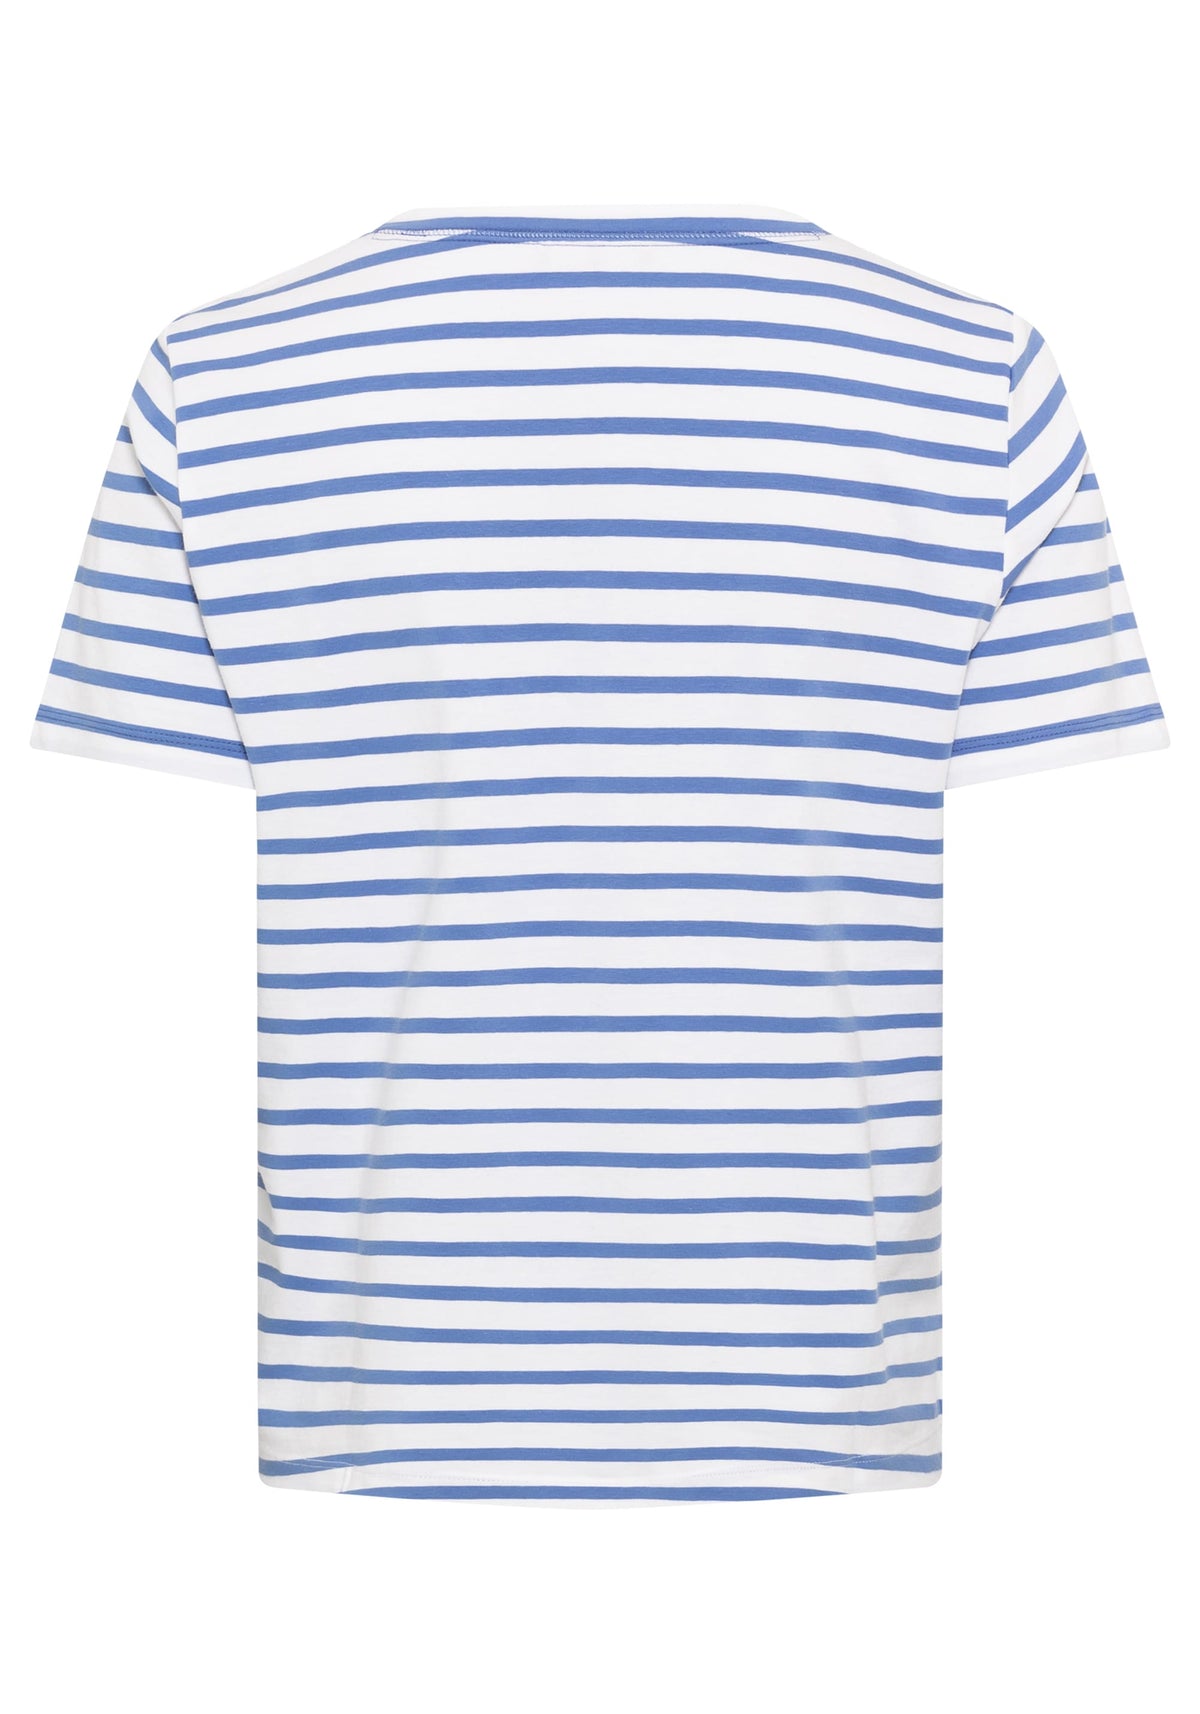 Cotton Blend Short Sleeve Striped V-Neck T-Shirt